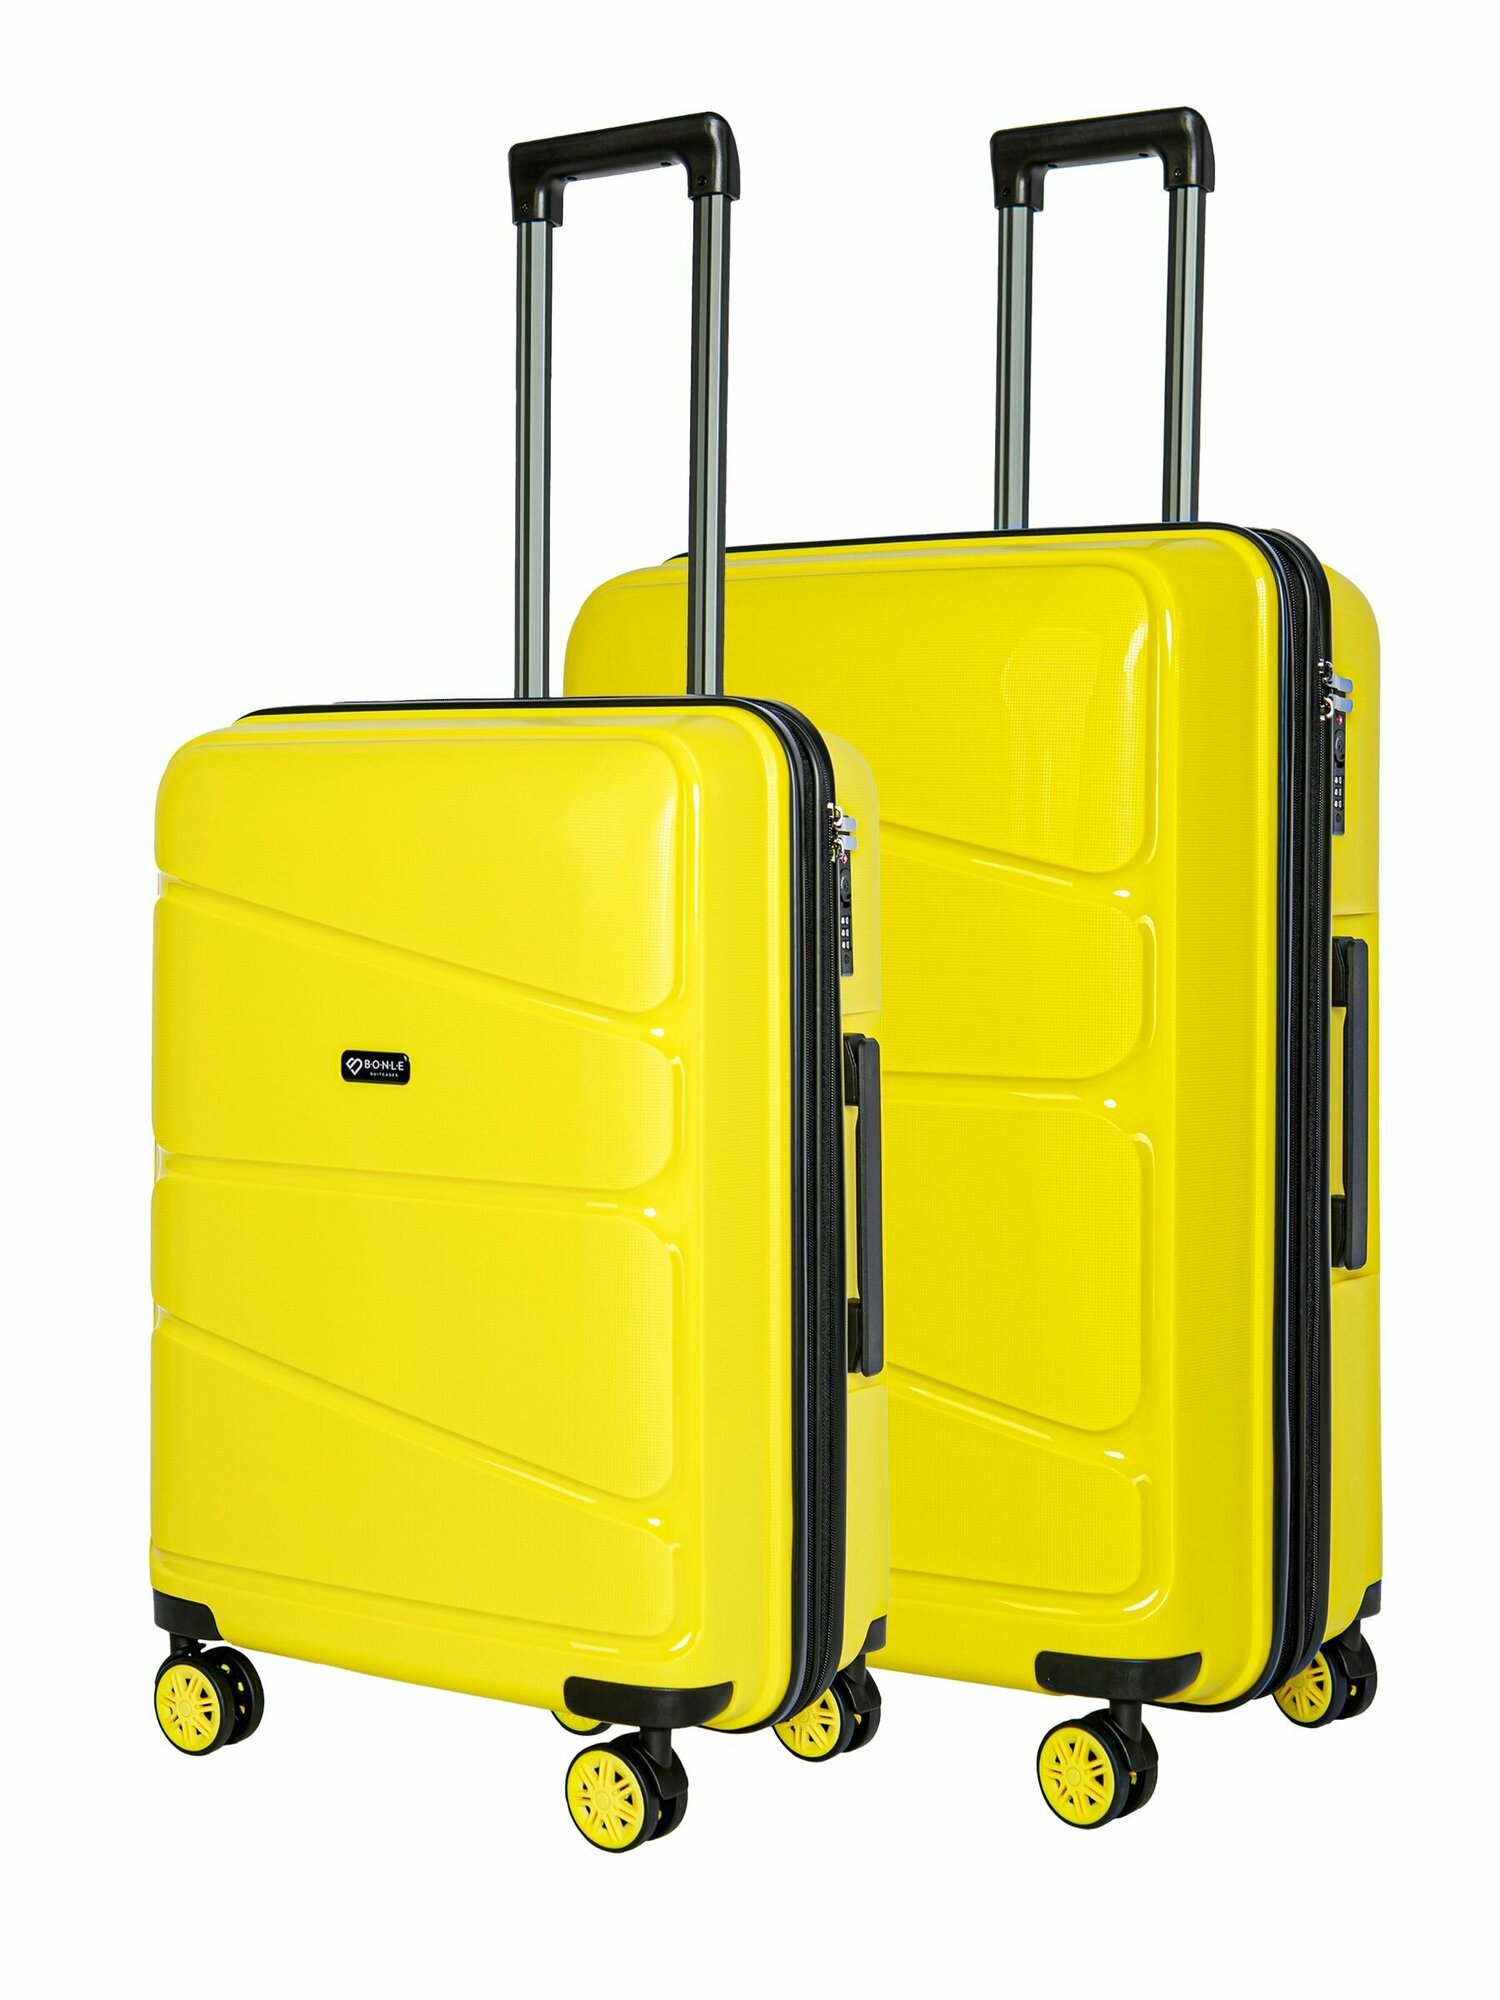 Комплект чемоданов Bonle, 2 шт.